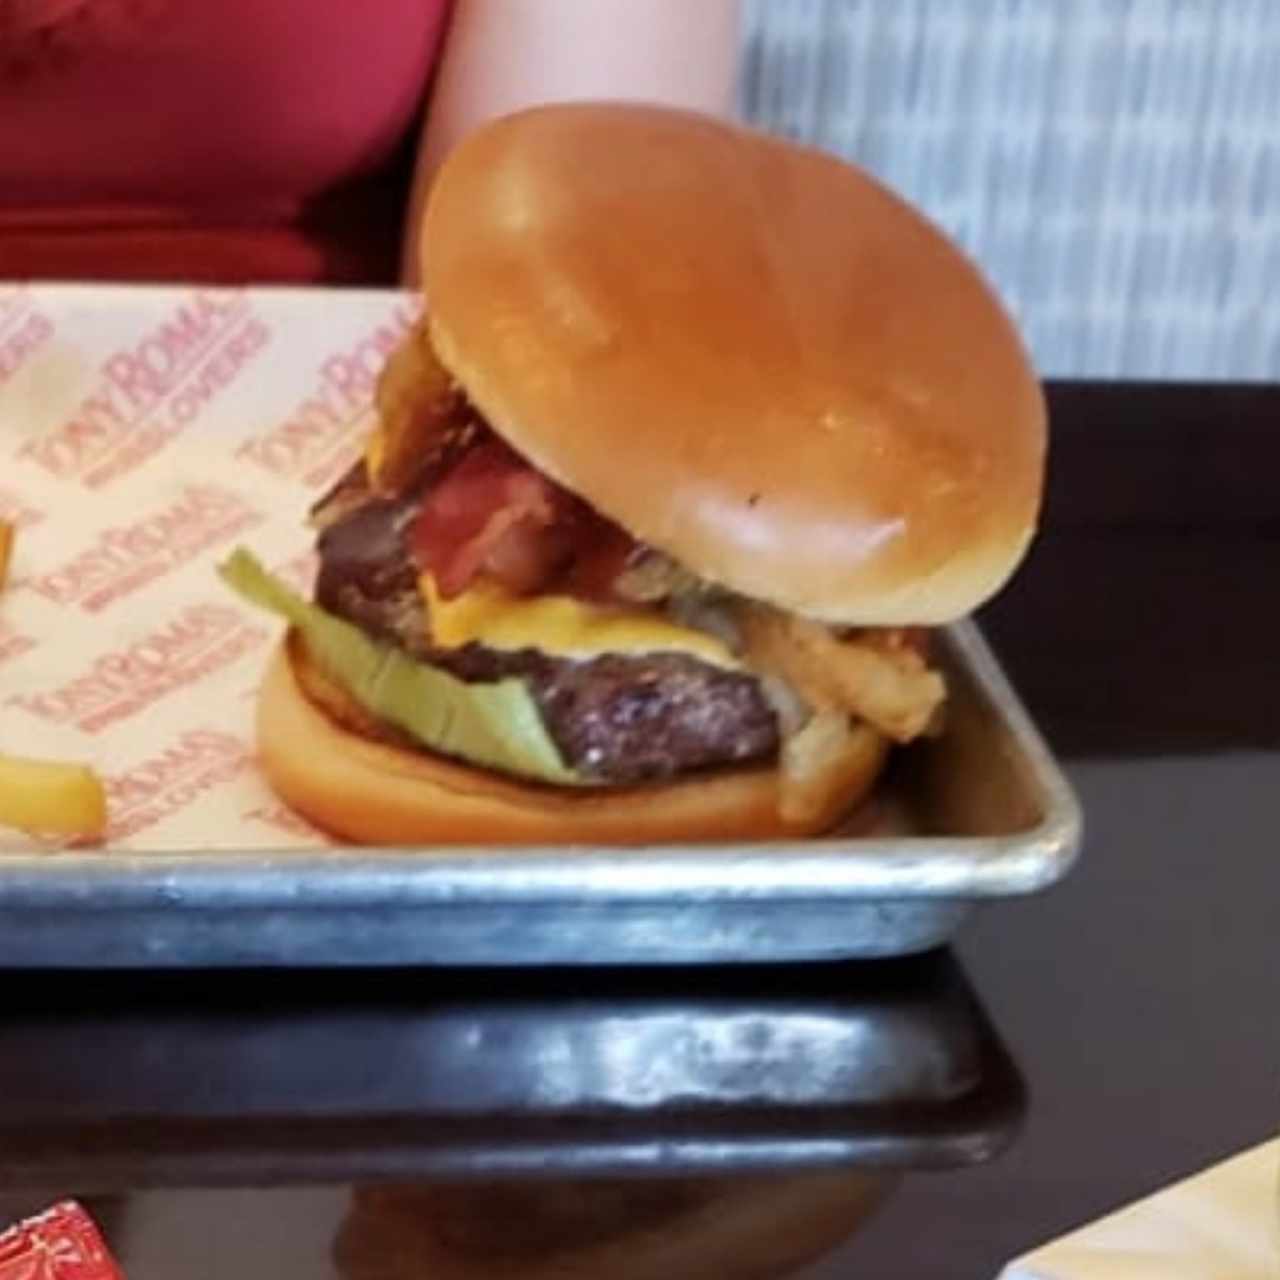 Classic American Burger